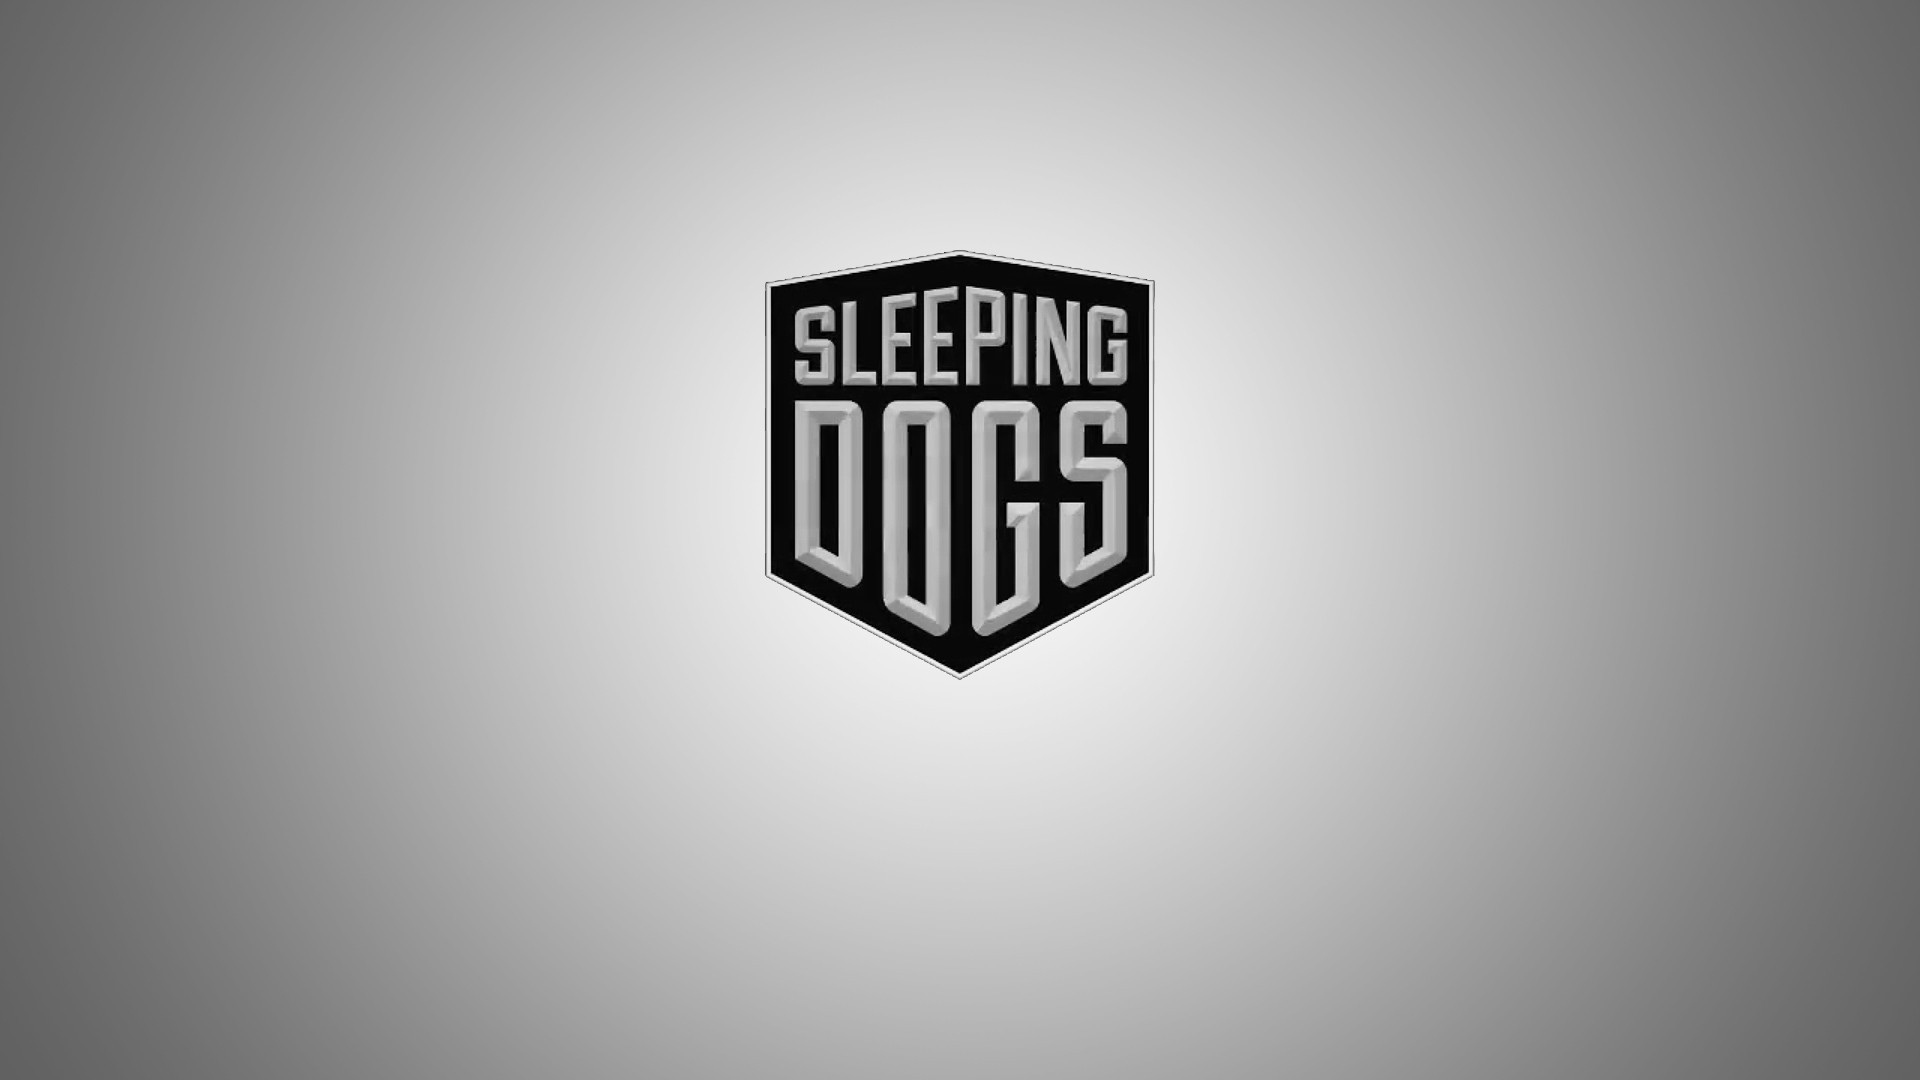 1920x1080 Sleeping dogs wallpaper